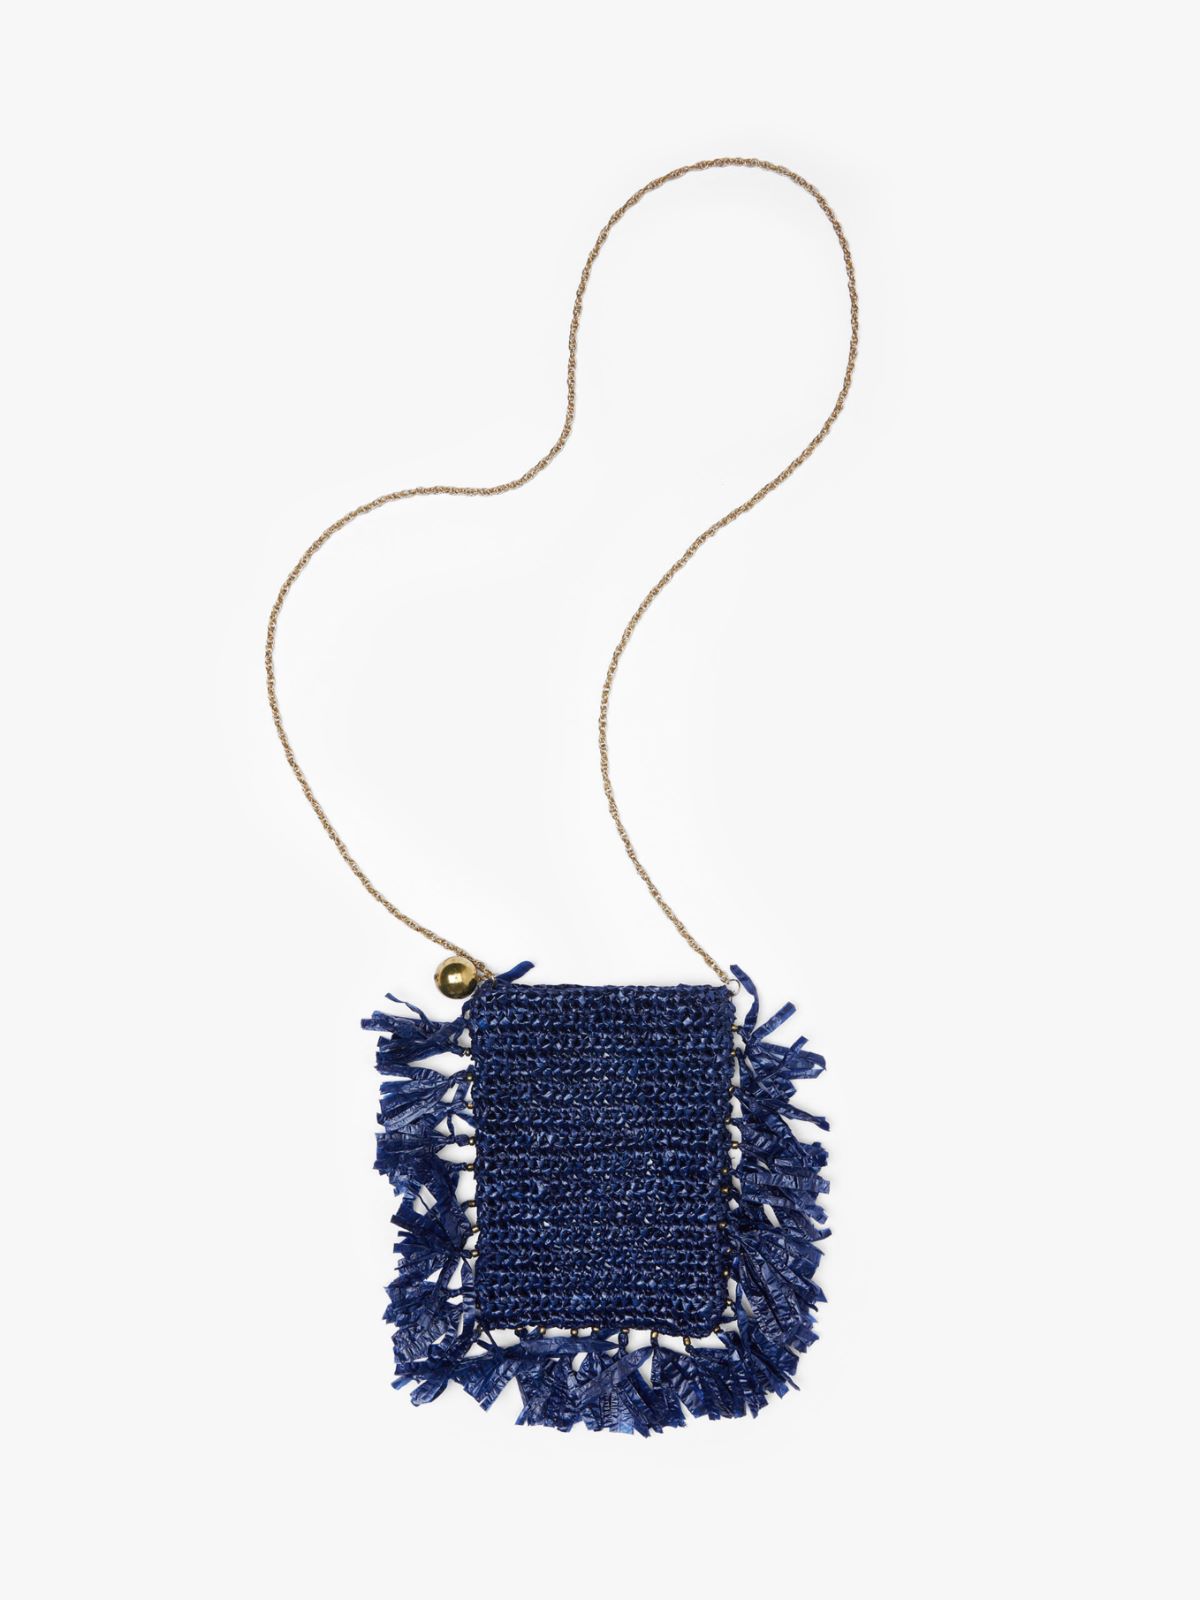 Smartphone mini bag in fabric - MIDNIGHTBLUE - Weekend Max Mara